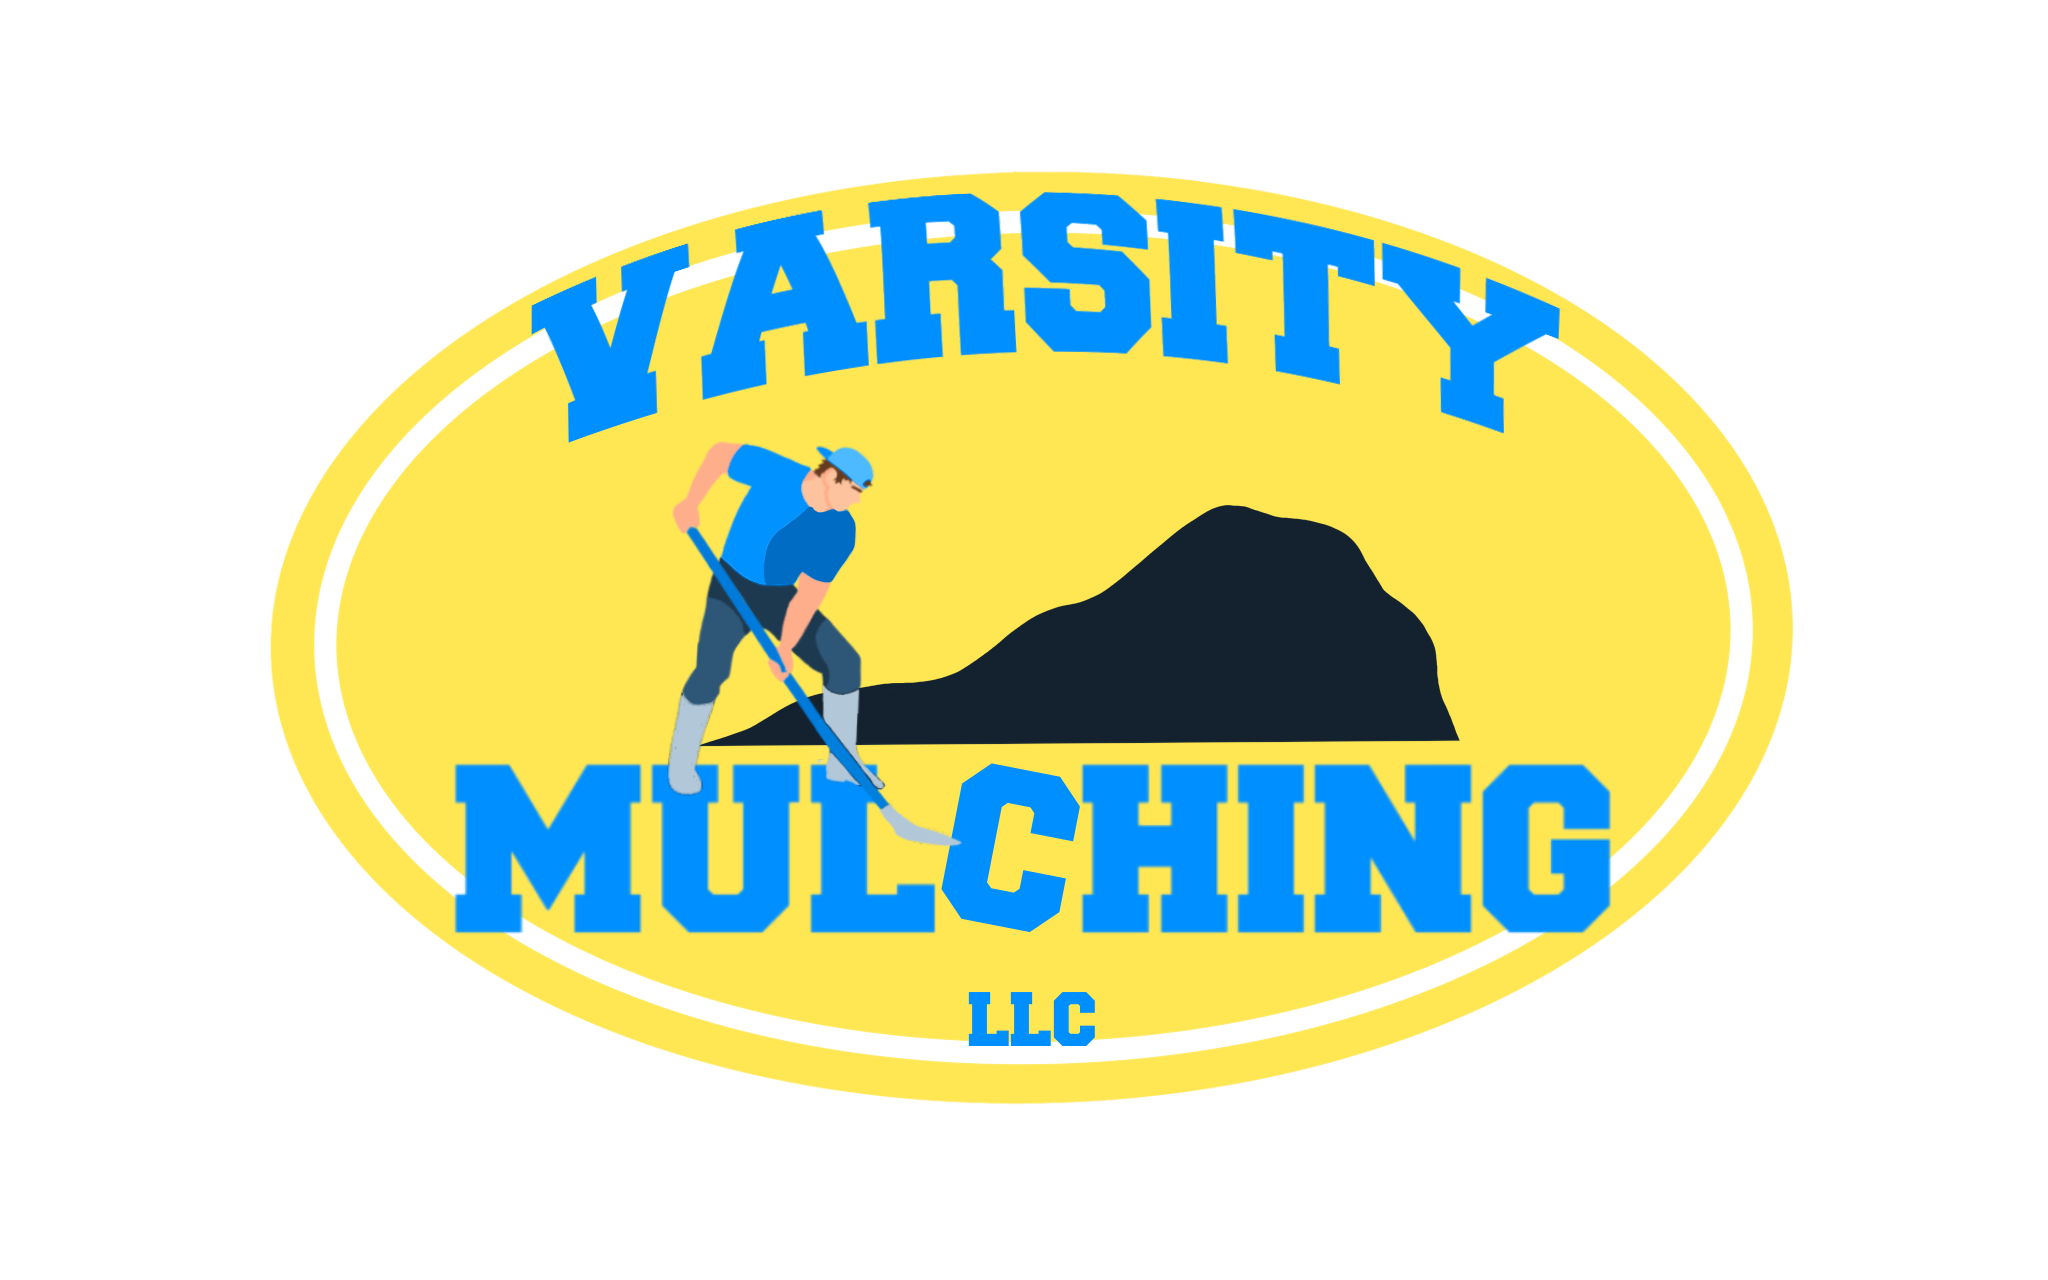 Varsity Mulching